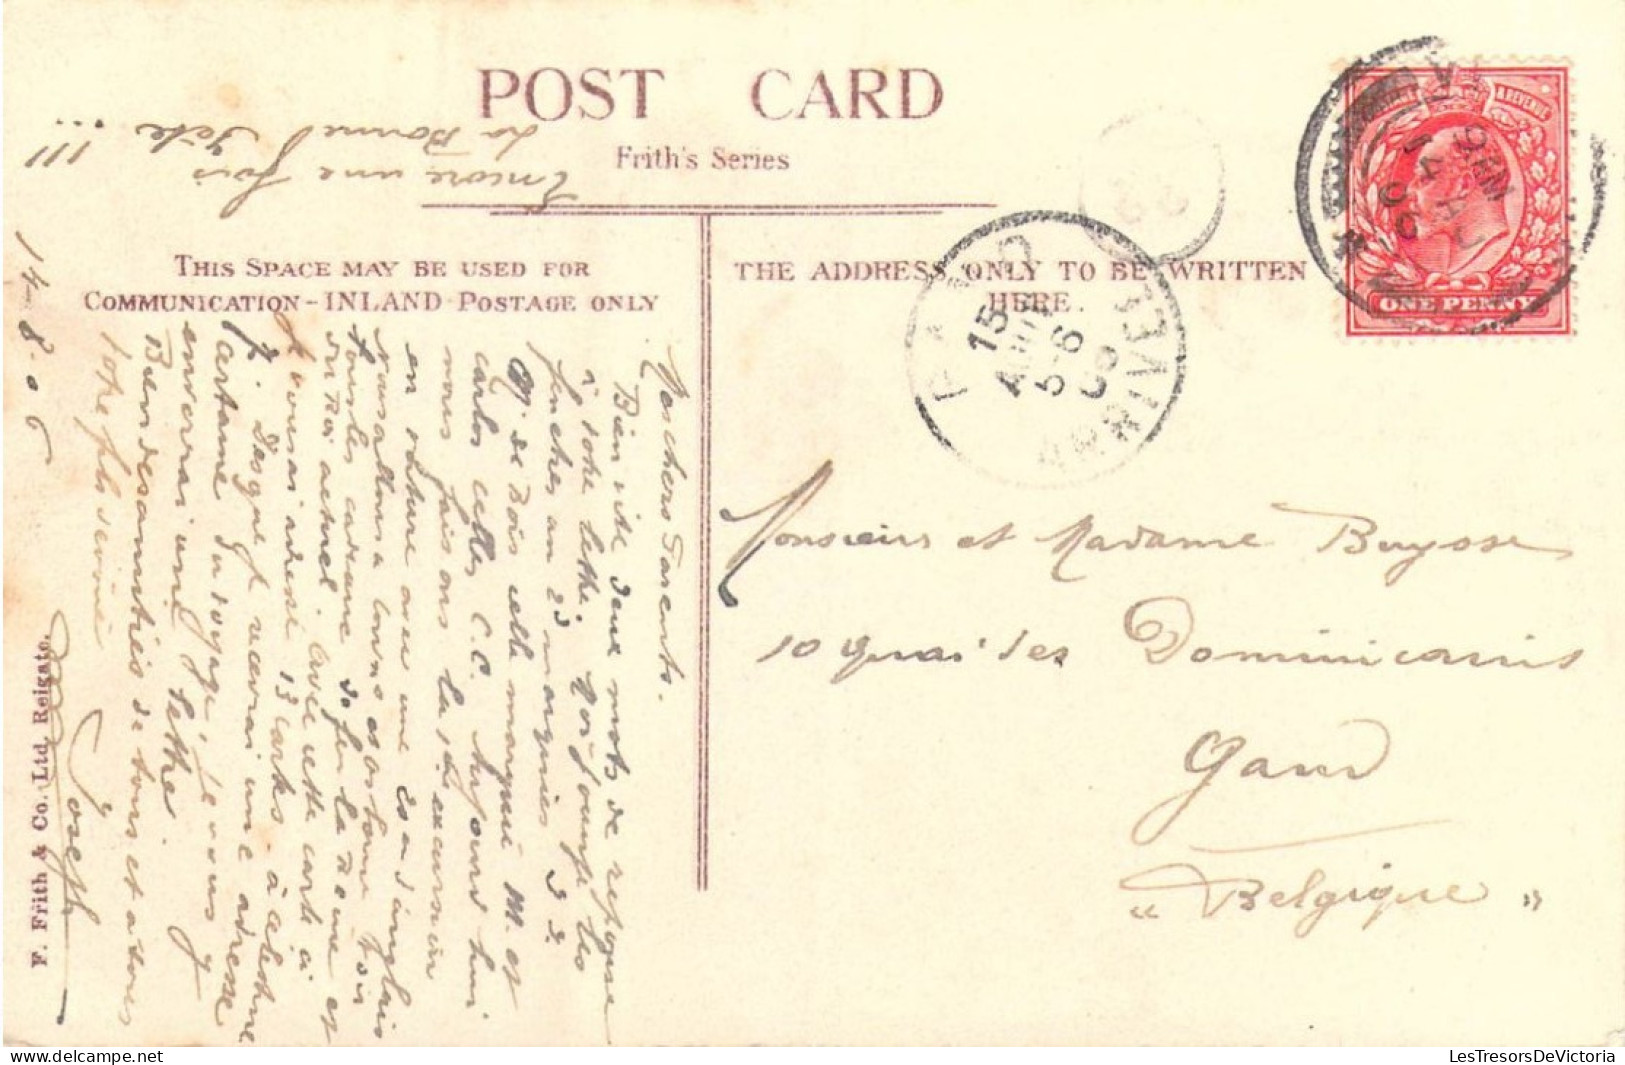 ANGLETERRE - Ventnor - Clarendon Boarding House - Carte Postale Ancienne - Ventnor